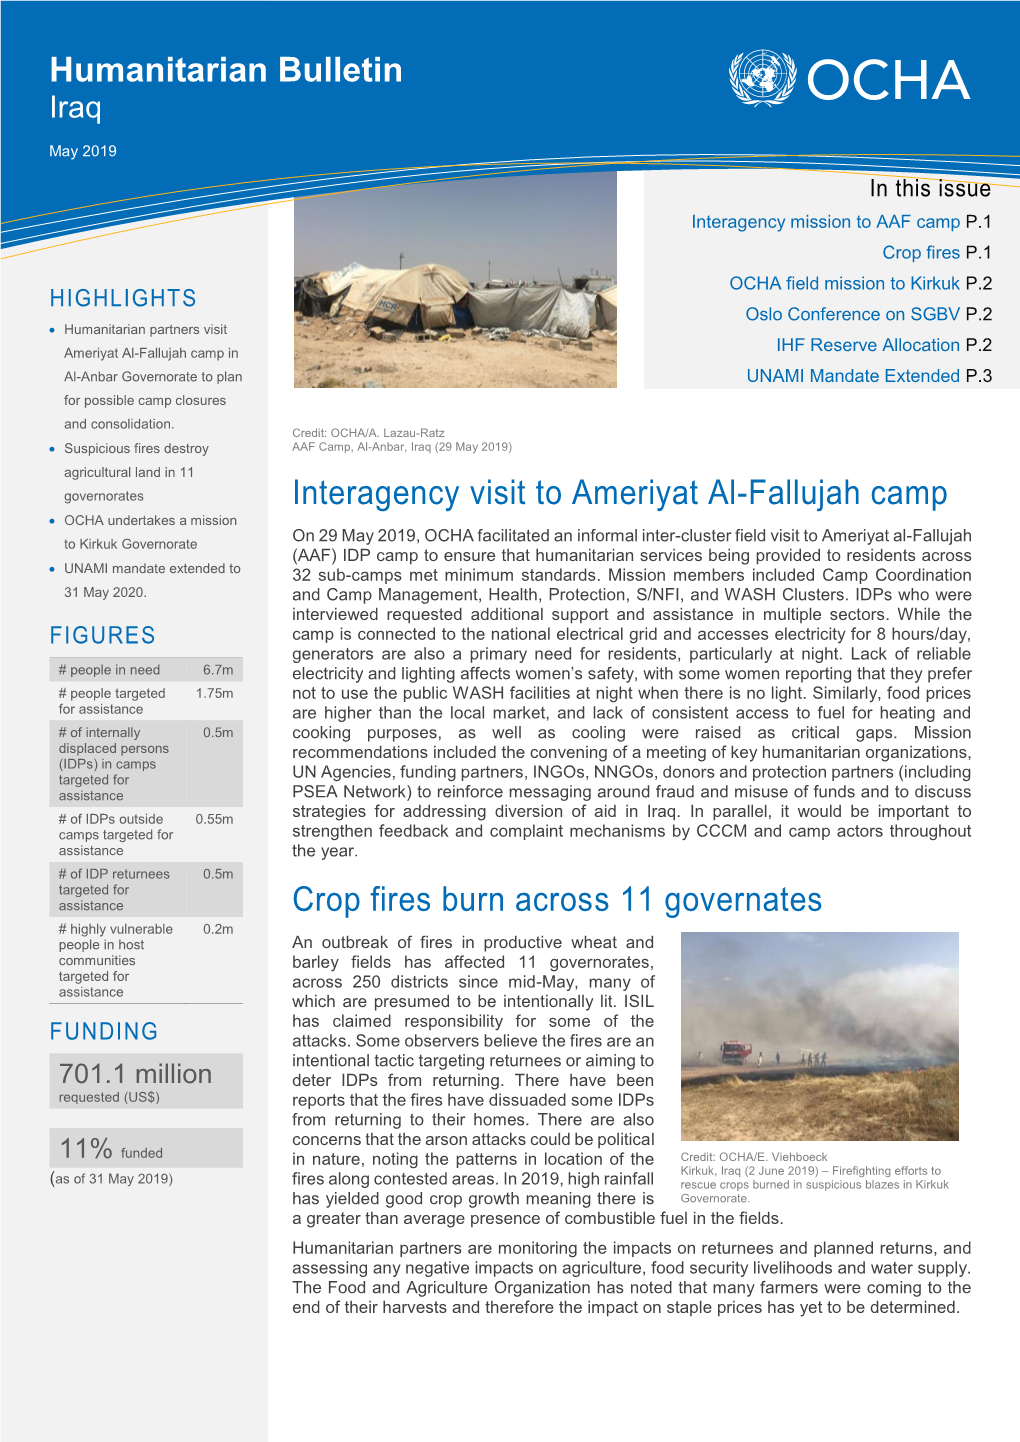 Interagency Visit to Ameriyat Al-Fallujah Camp Crop Fires Burn